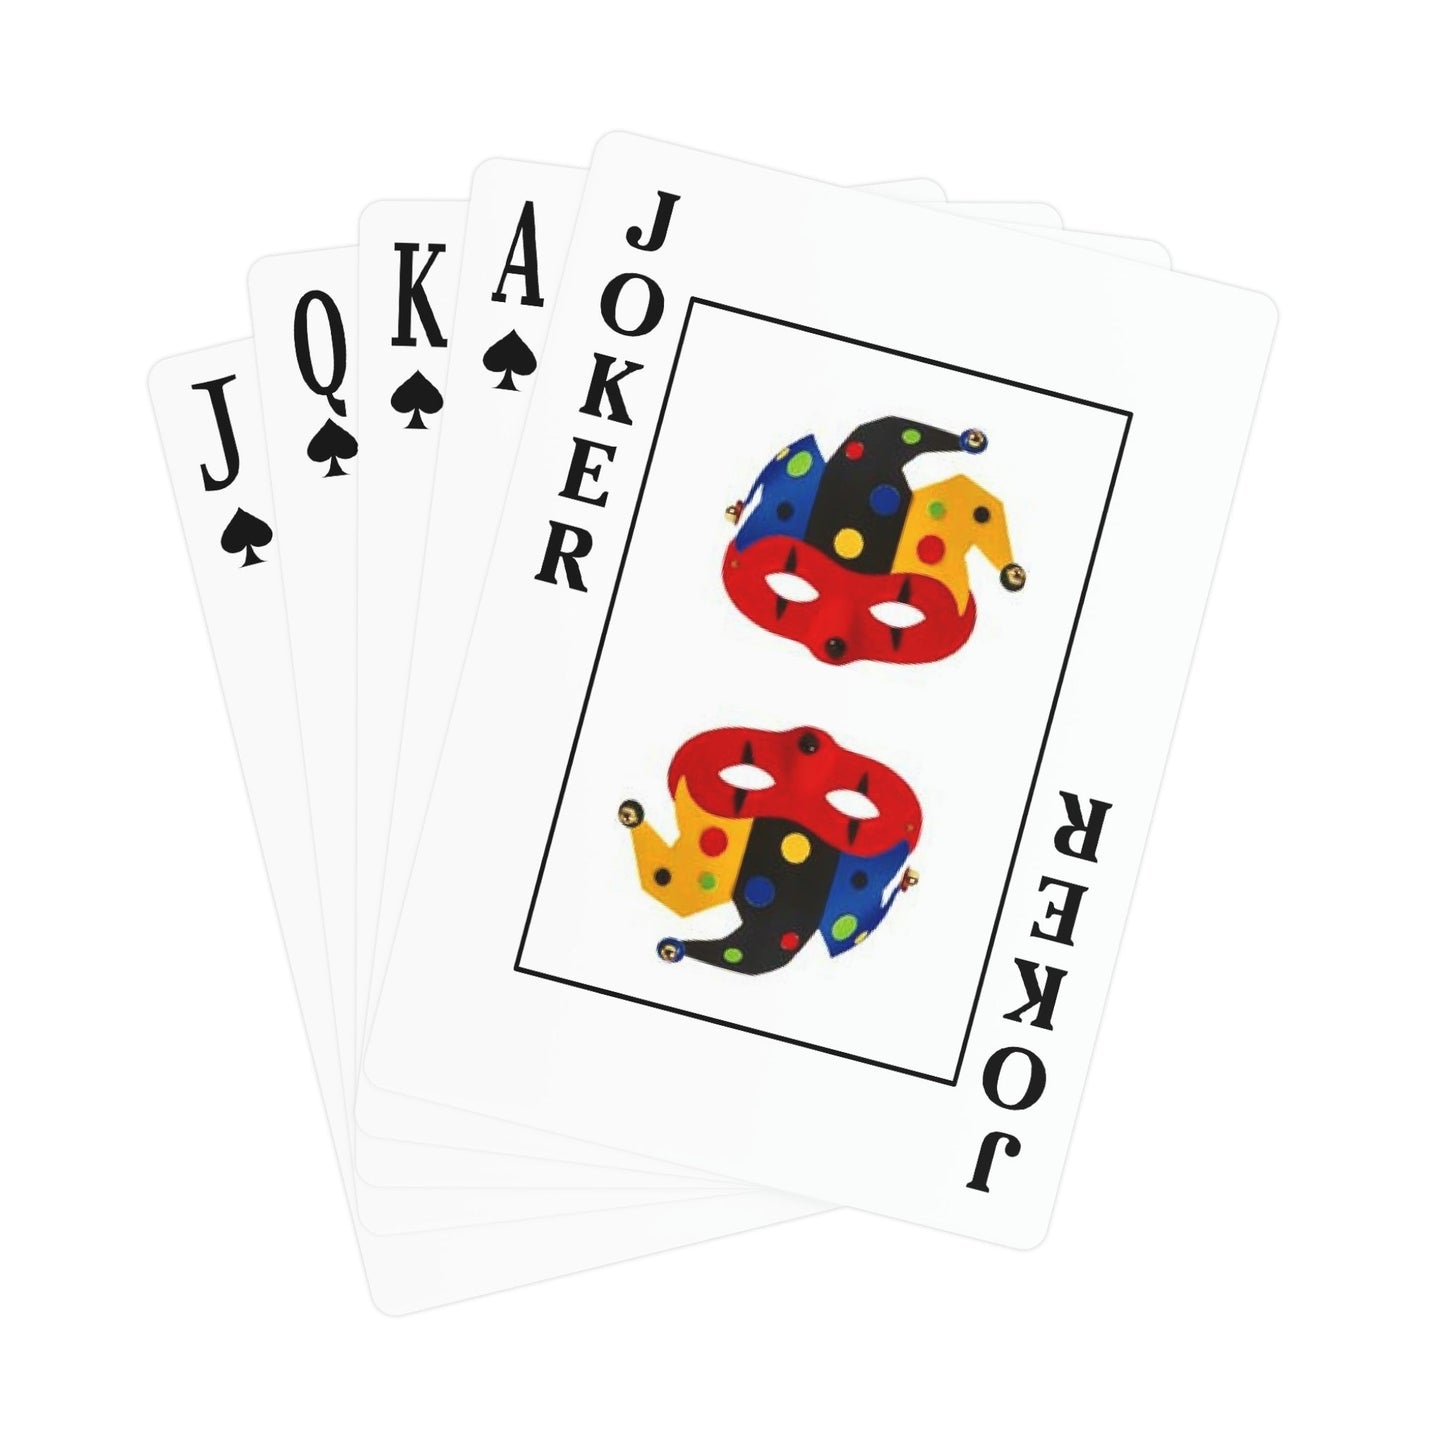 Bearded Dragon "Beardy" Tattoo Poker Playing Cards